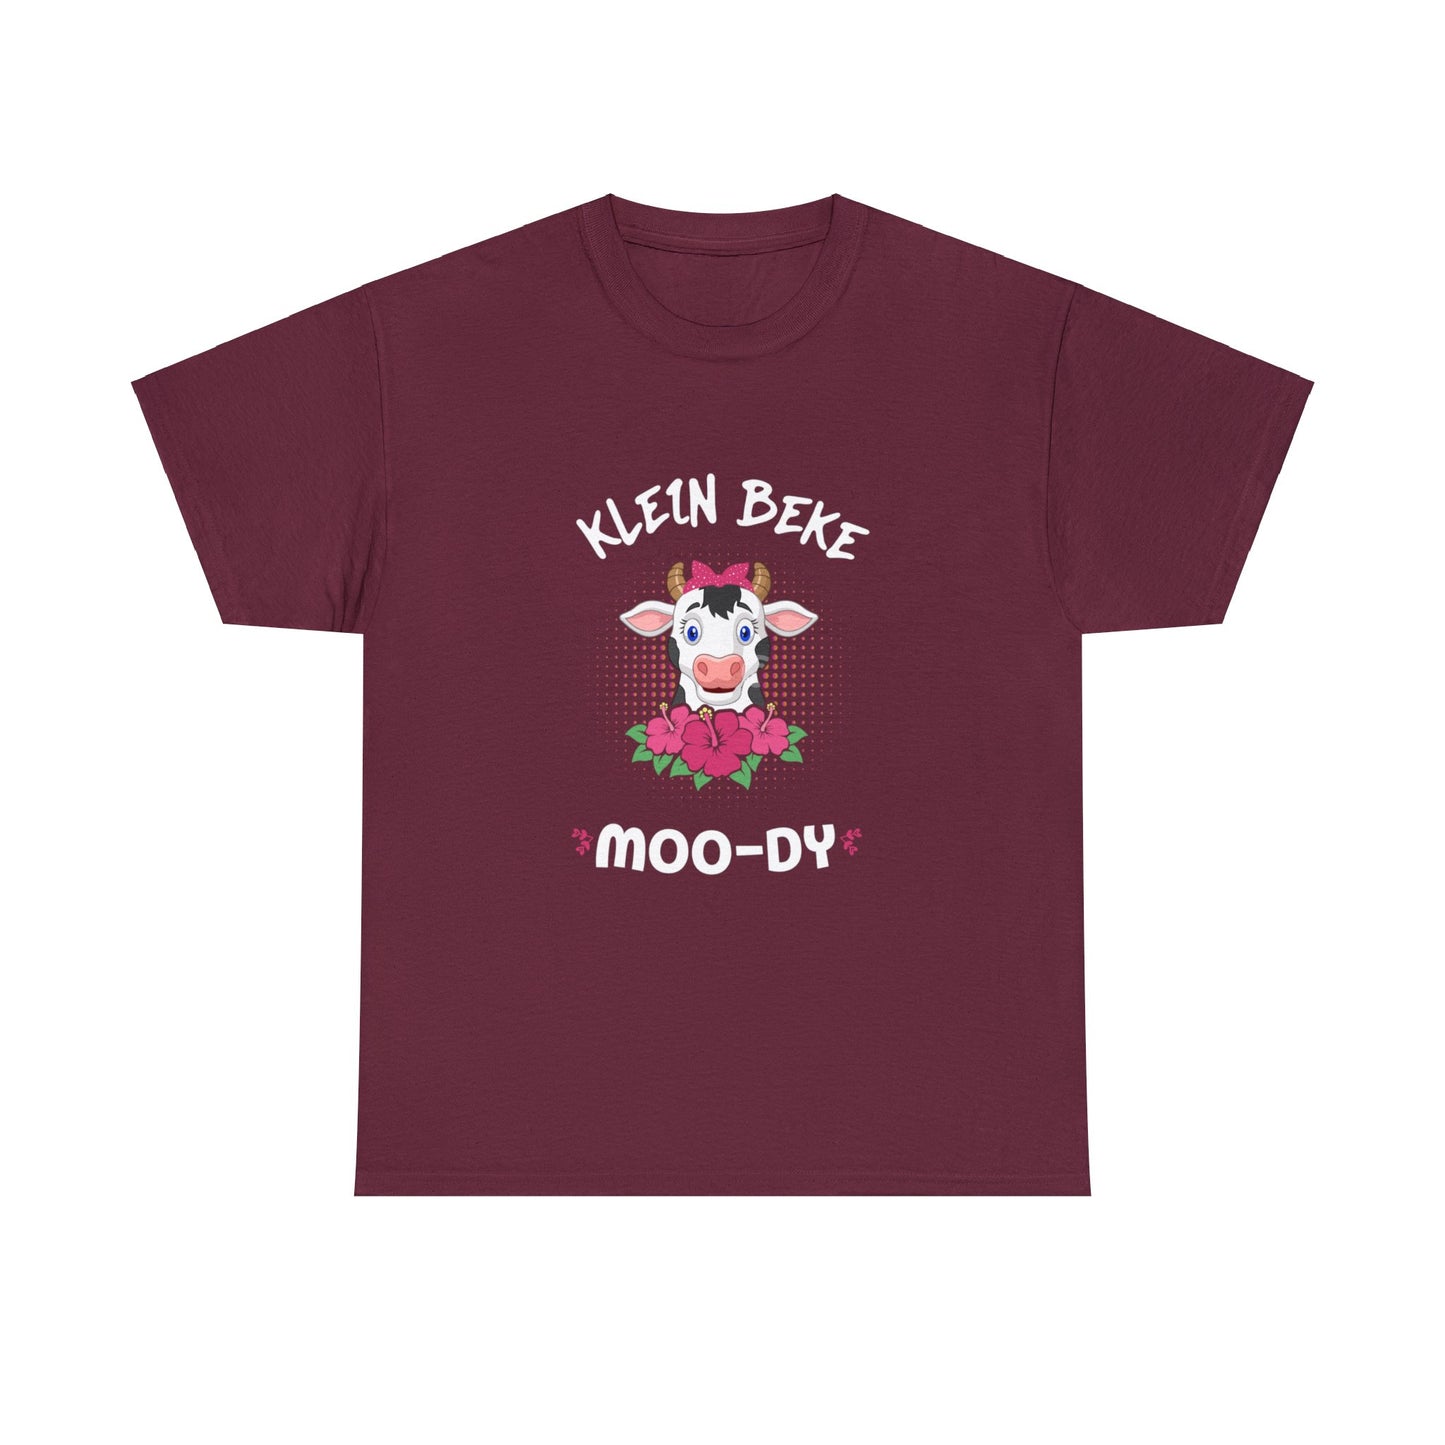 Klein Beke Moody Concept Tshirt